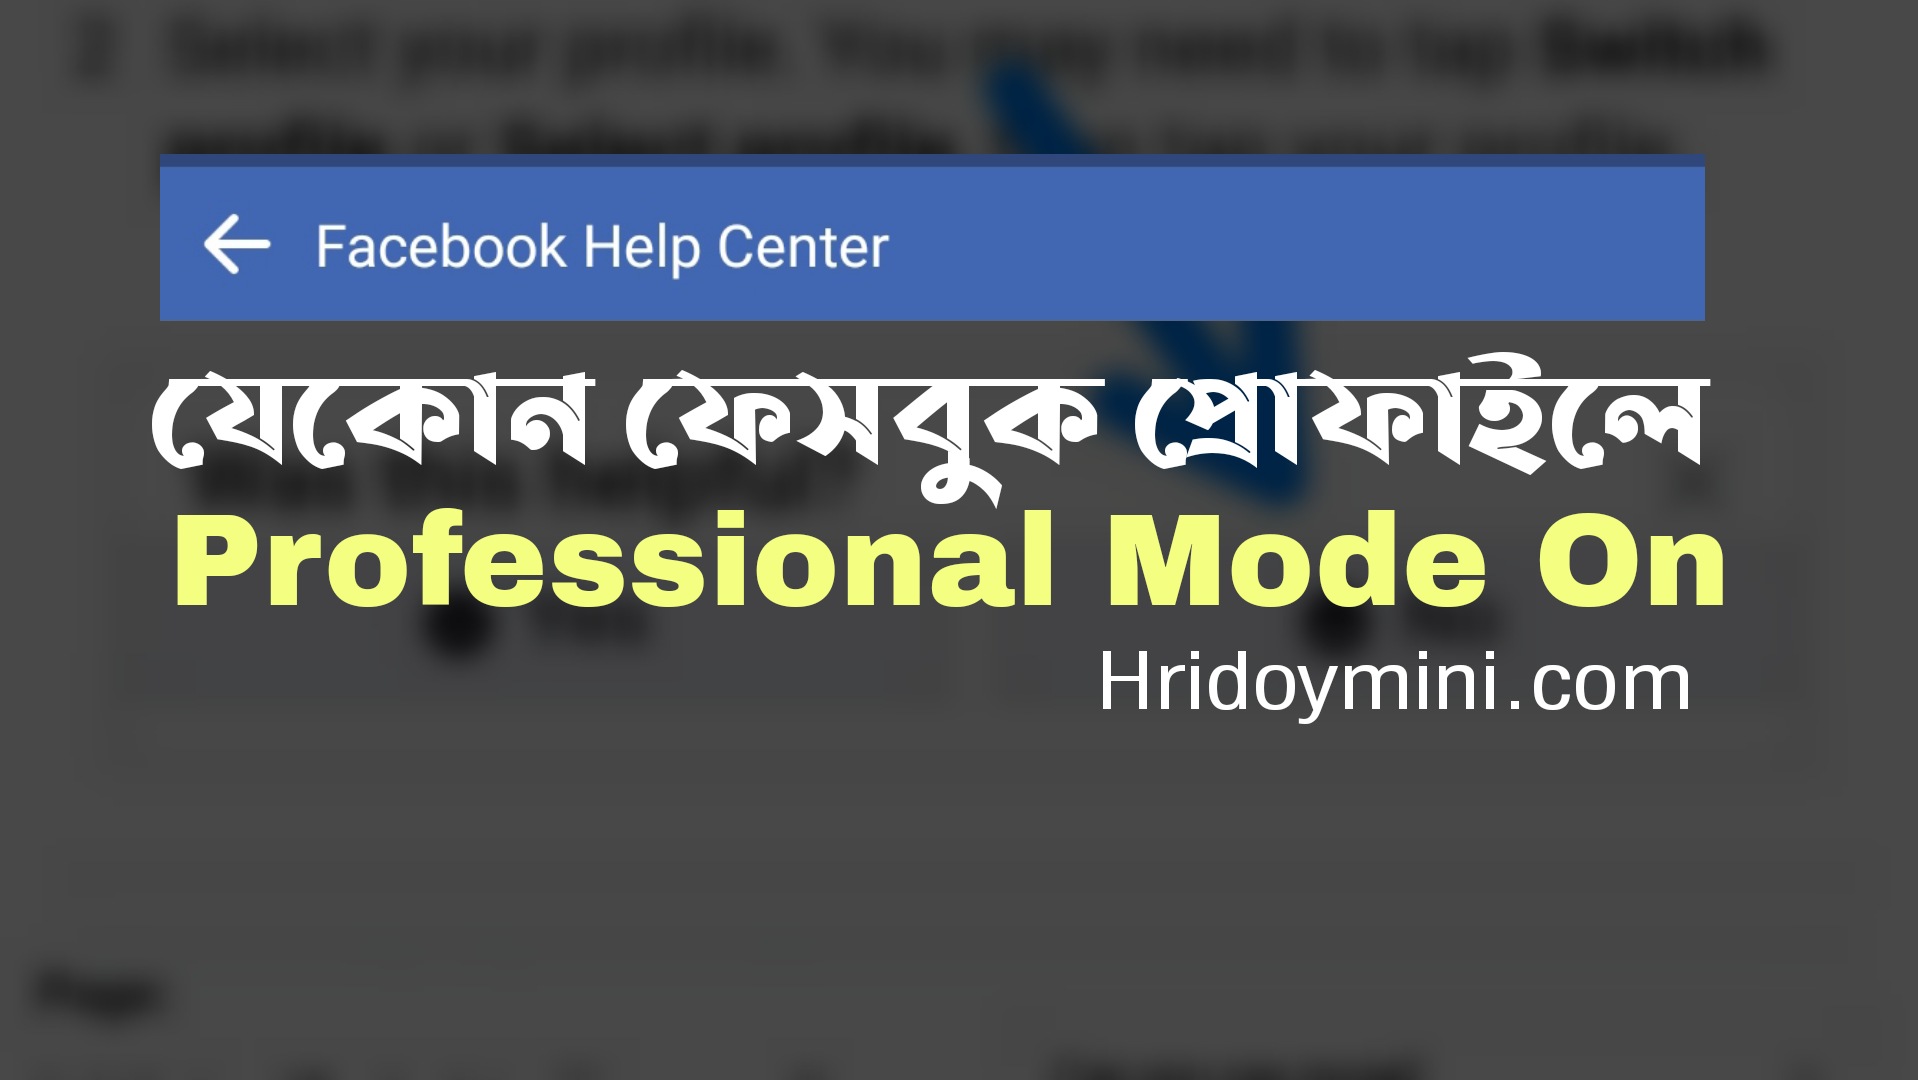 How to enable Professional mode in Facebook | যাদের প্রফেশনাল মোড অন হয় নি তারা দেখুন